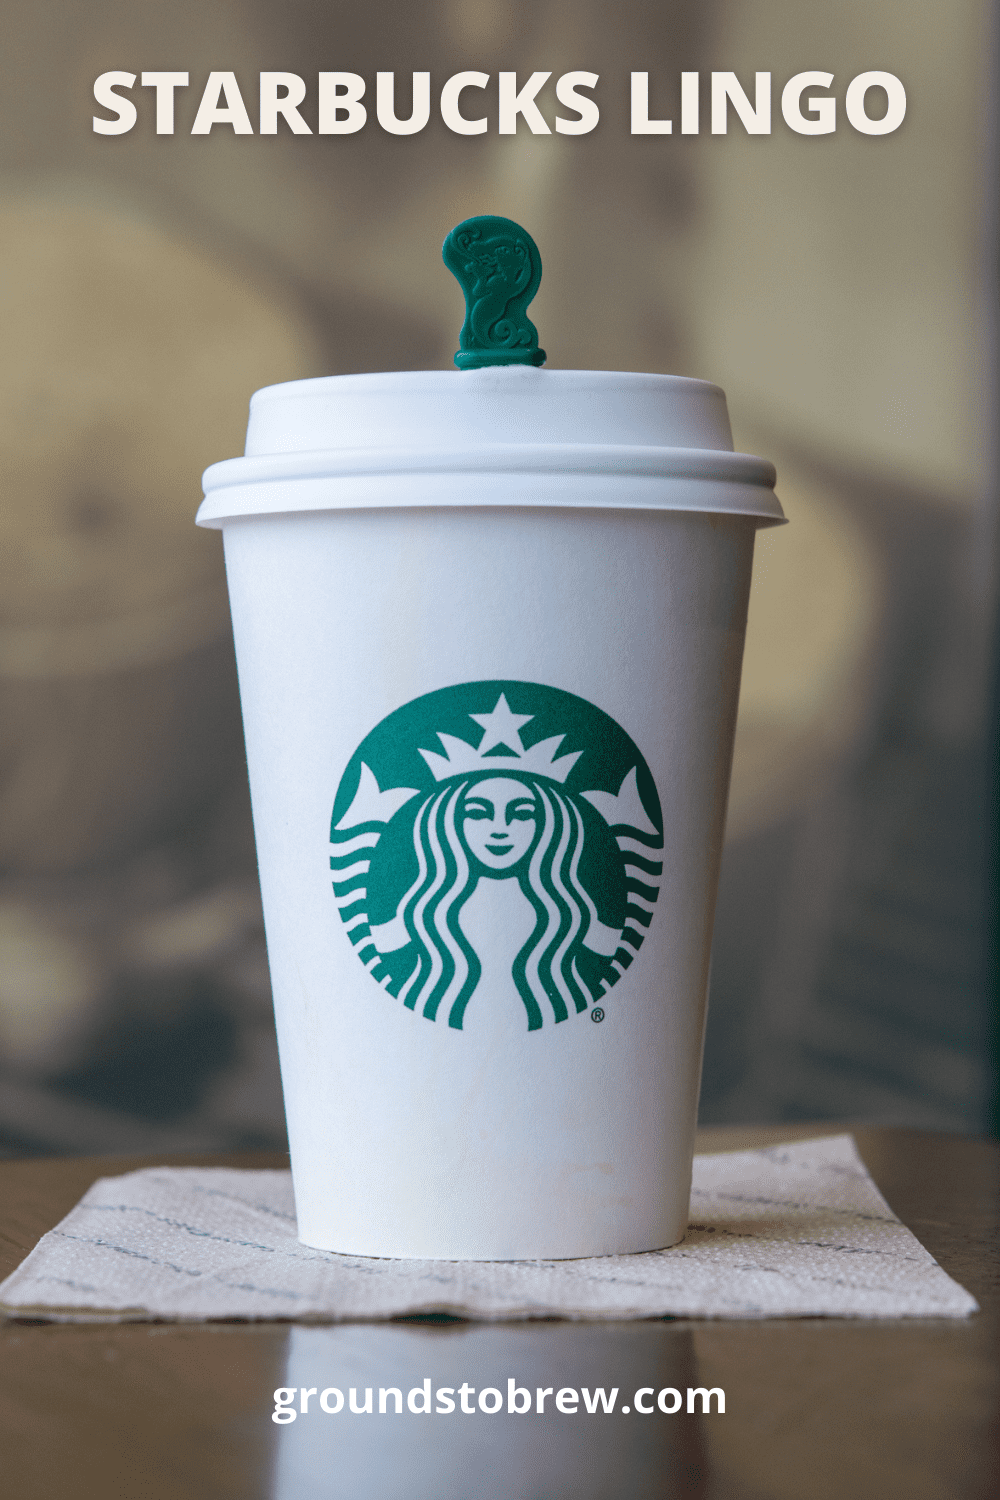 Starbucks lingo and Starbucks hot cup.